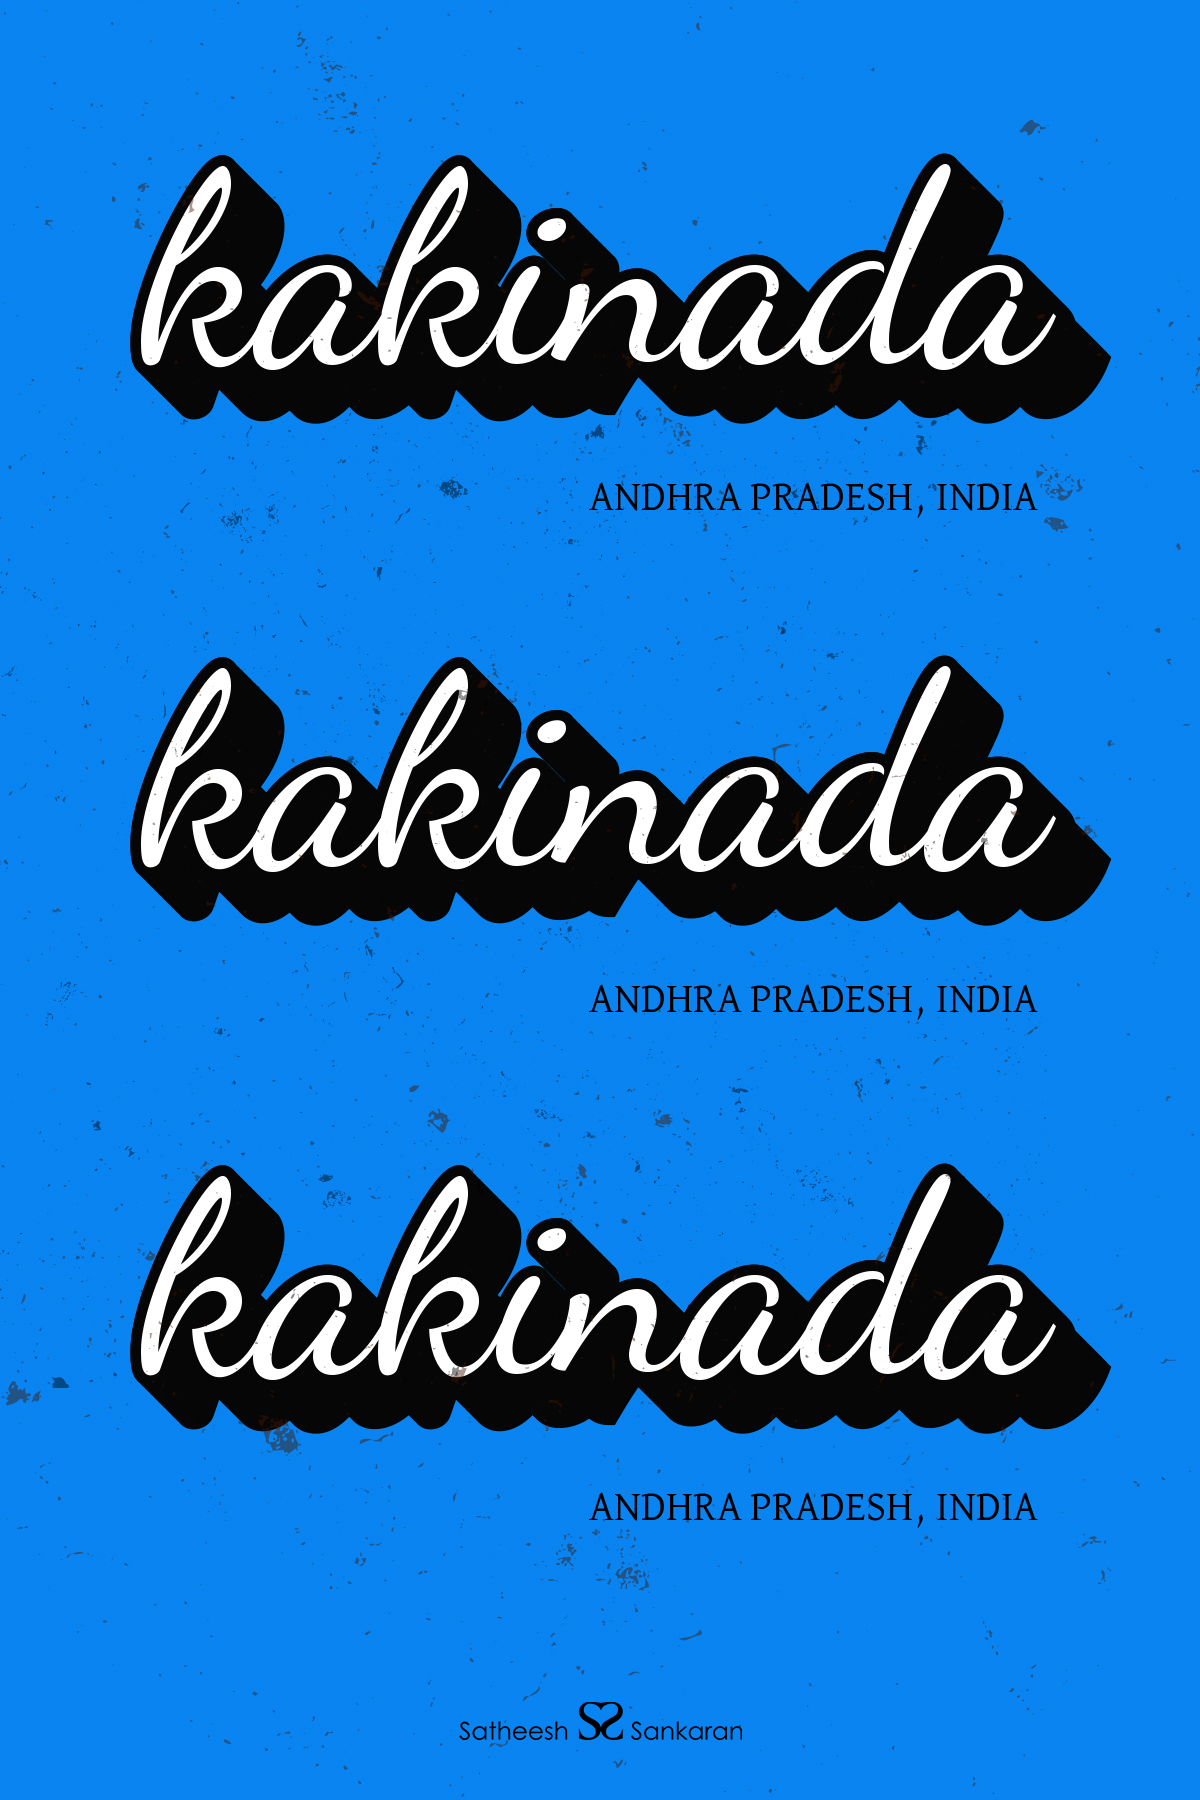 Kakinada, Andhra Pradesh in India - Typography Poster Design